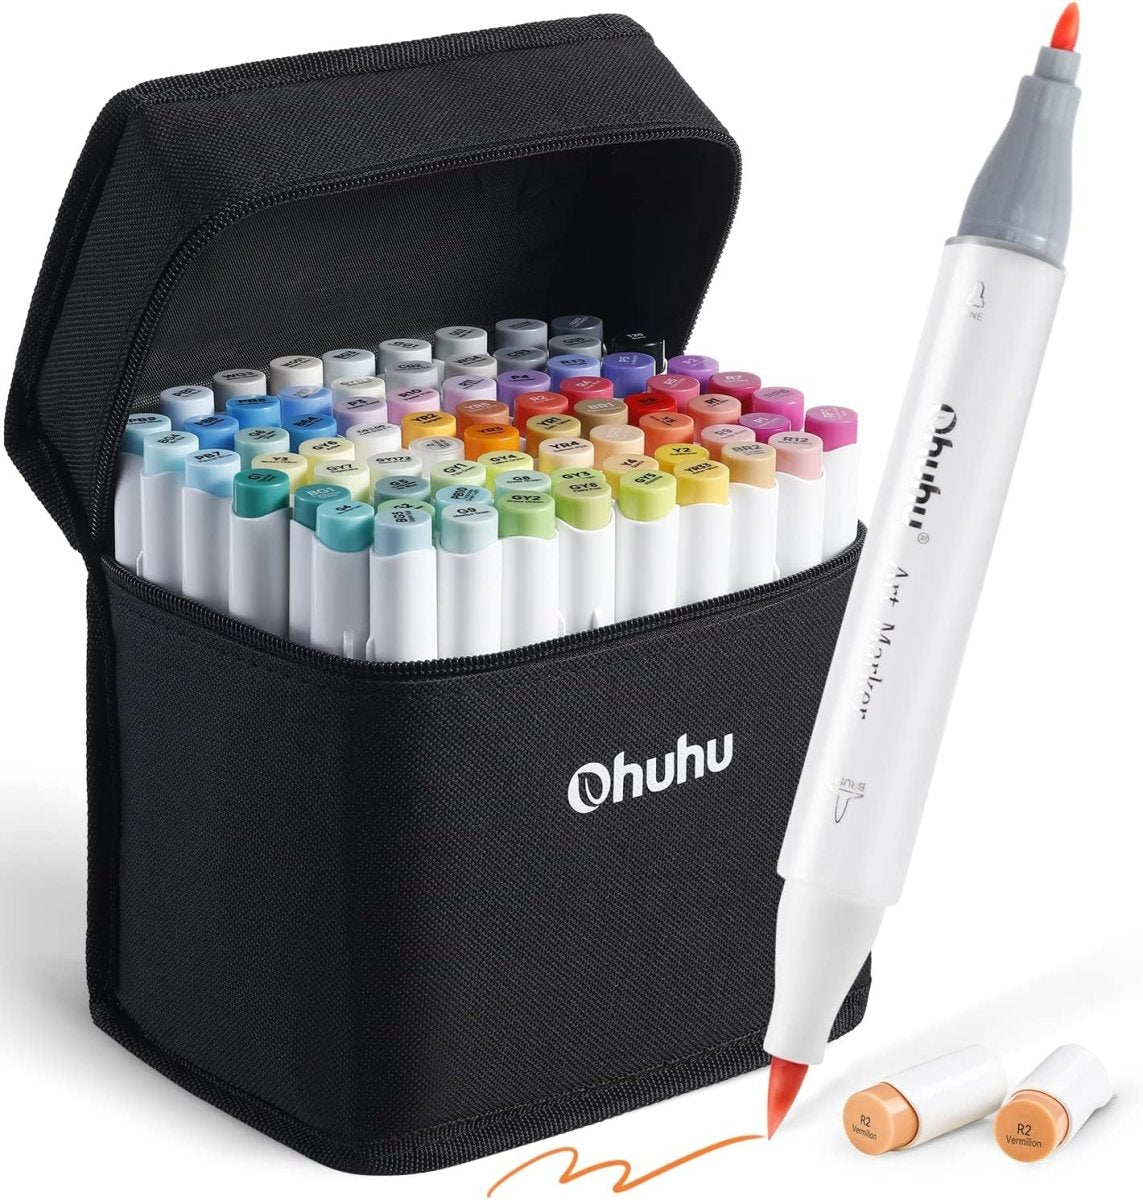 72 Colors Dual Tips Brush Drawing Pens Watercolor Art Markers Set for  Coloring 